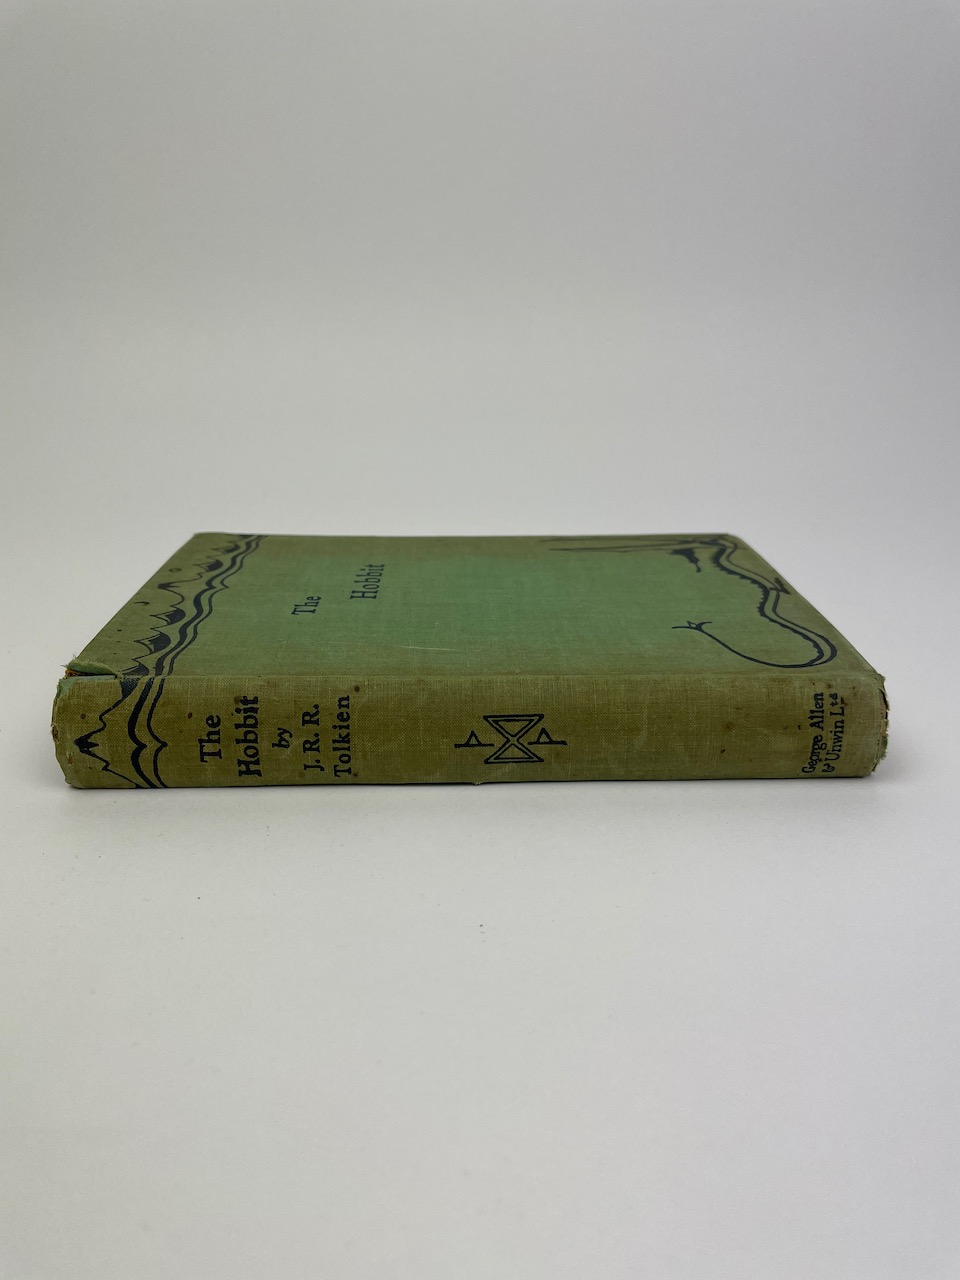 
The Hobbit, George Allen & Unwin, 1937 1st UK Edition 2nd impression 16